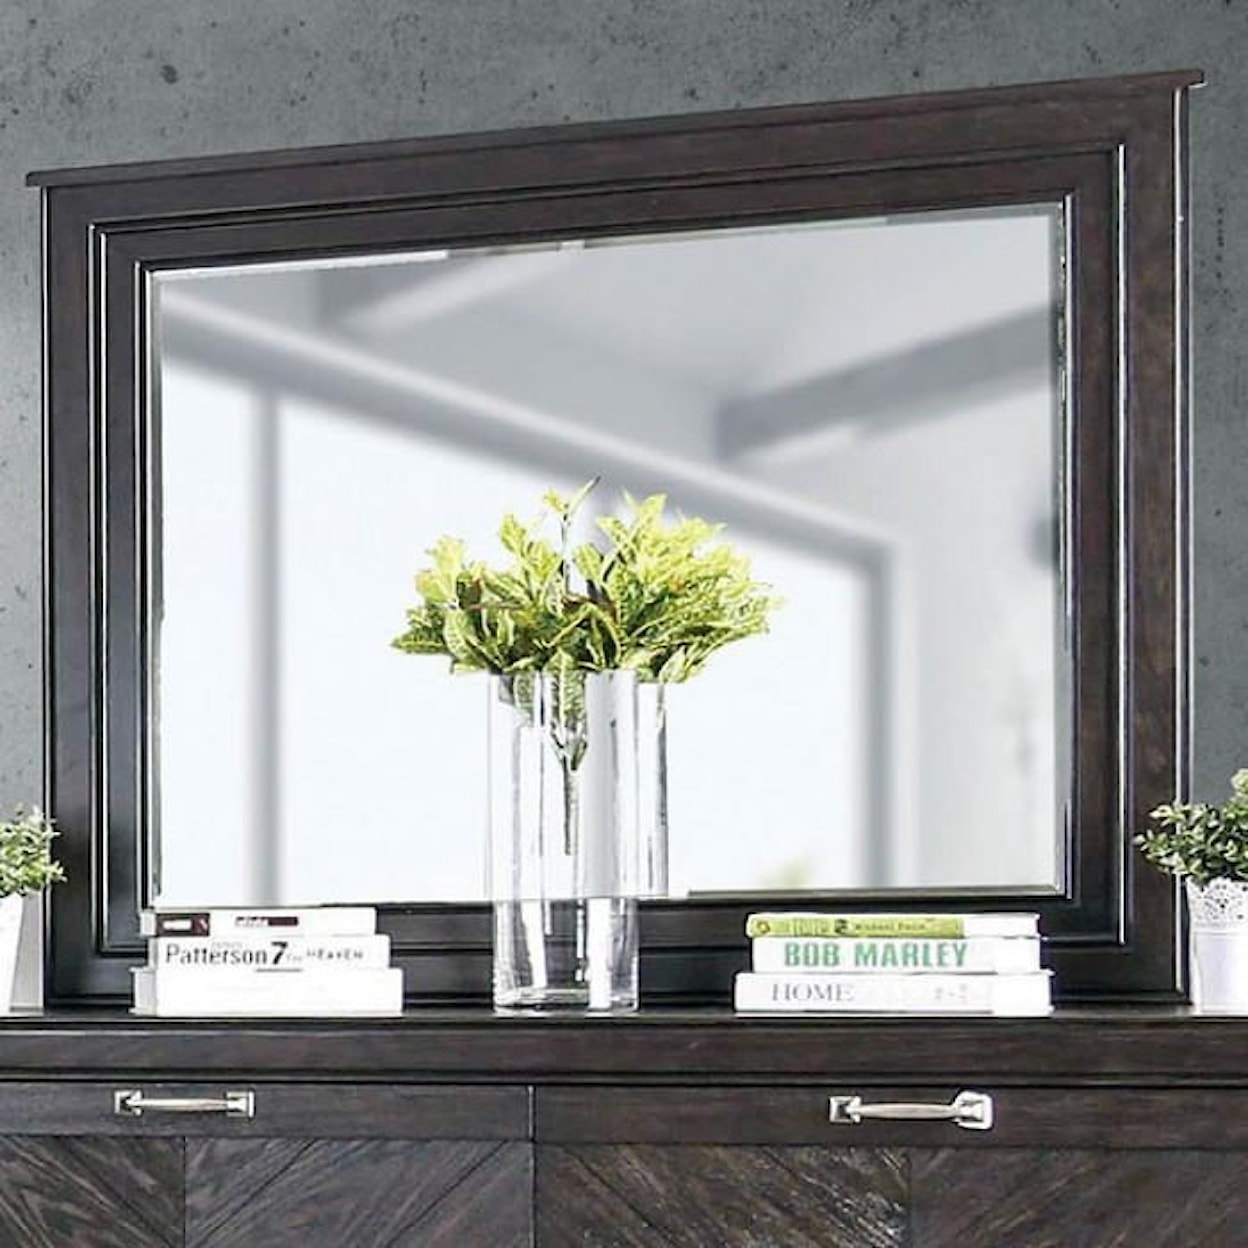 Furniture of America ARGYROS Dresser Mirror